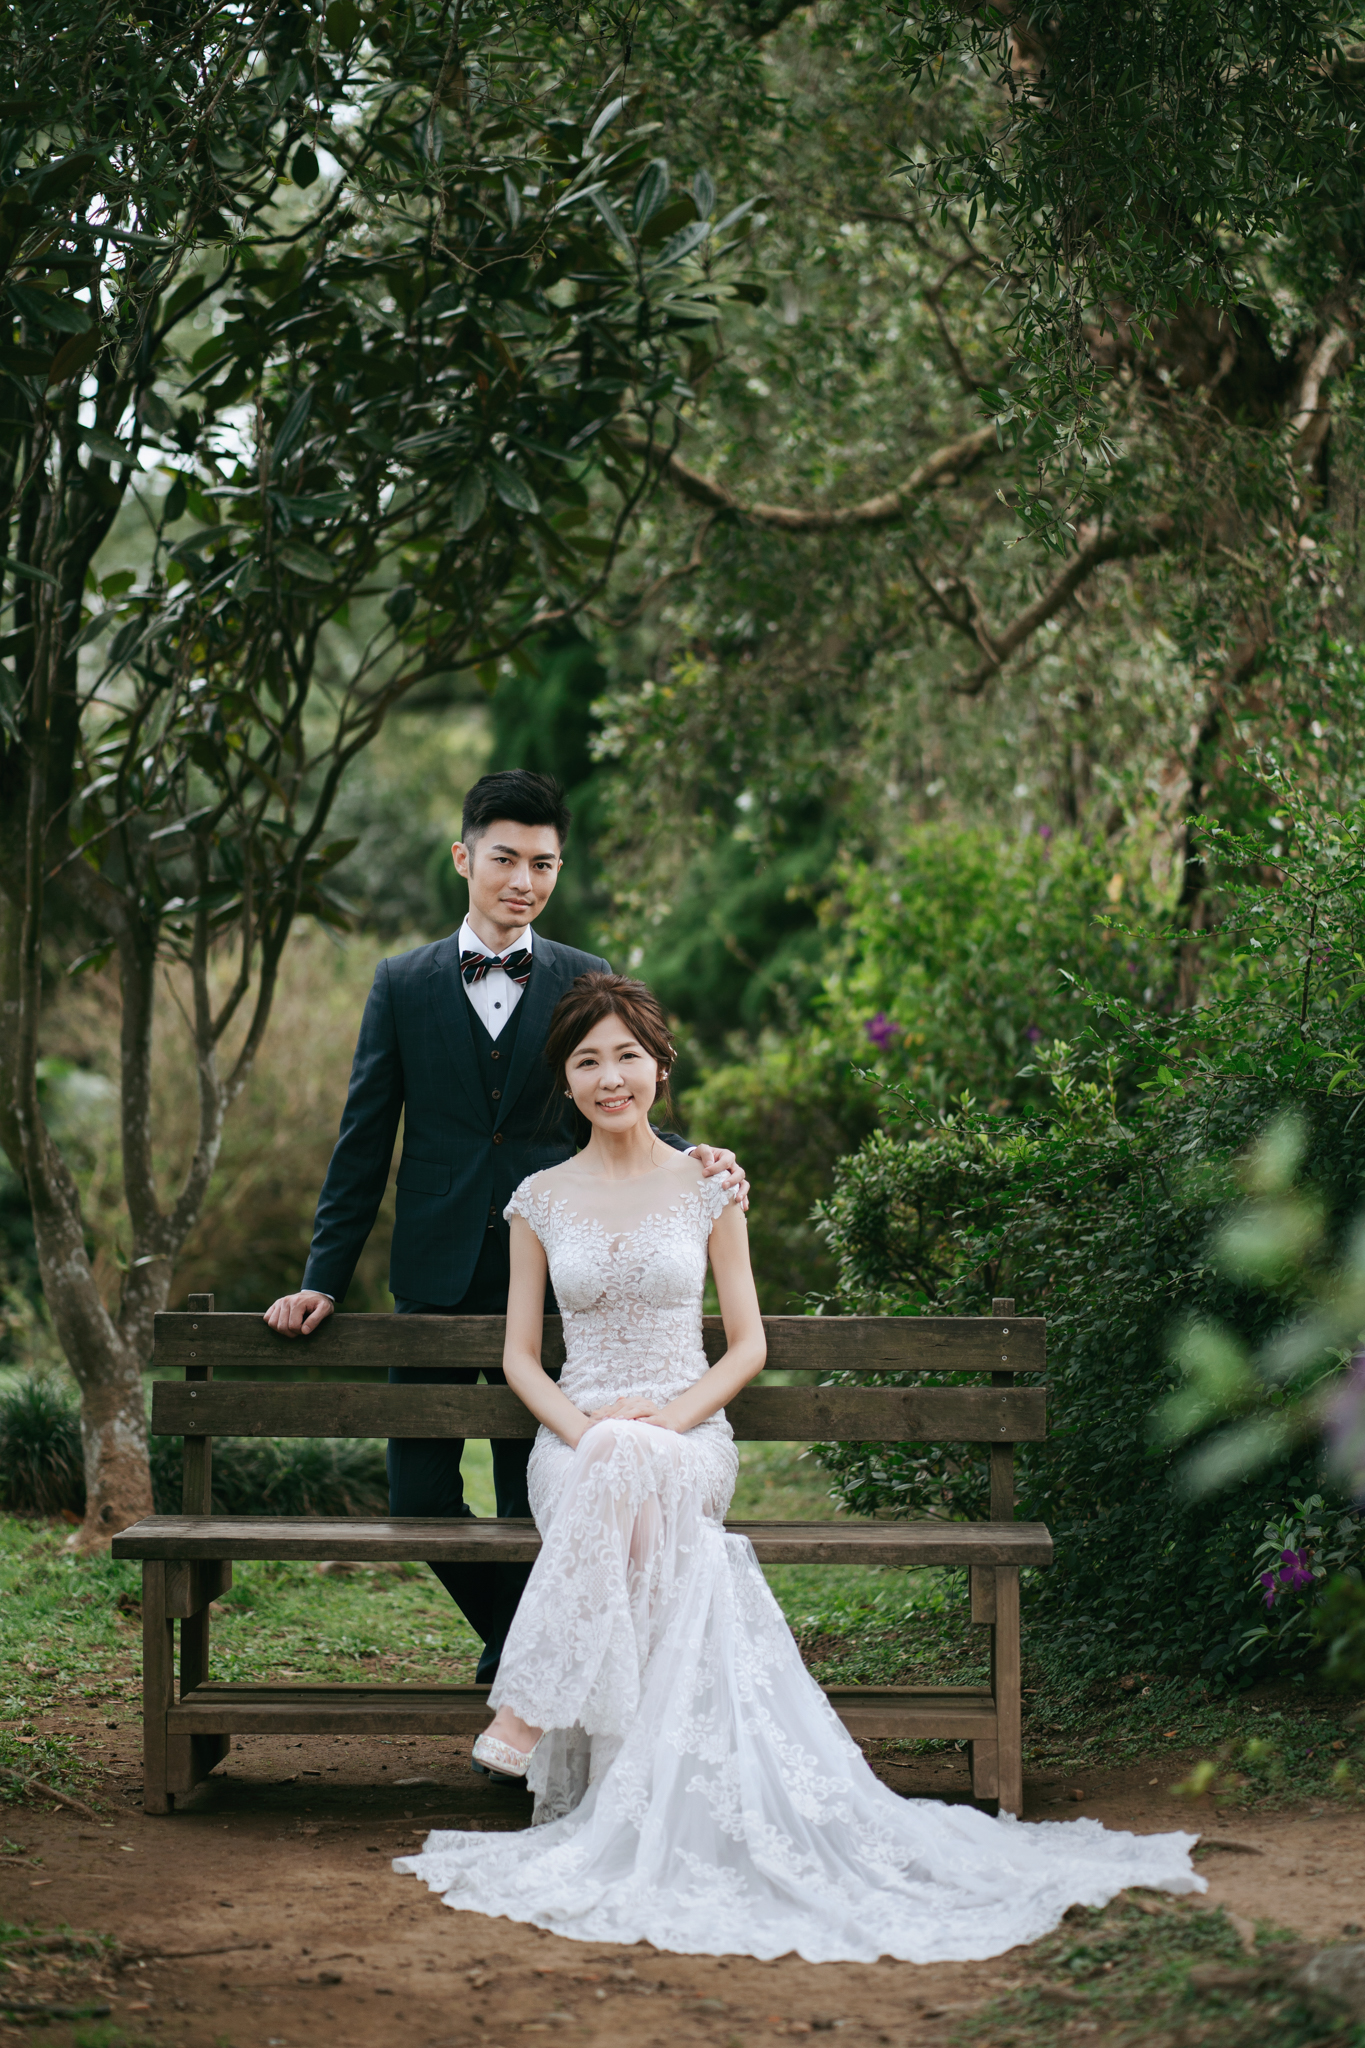 Donfer, EASTERN WEDDING, 台北婚紗, 藝術婚紗, 芒草, 森林系